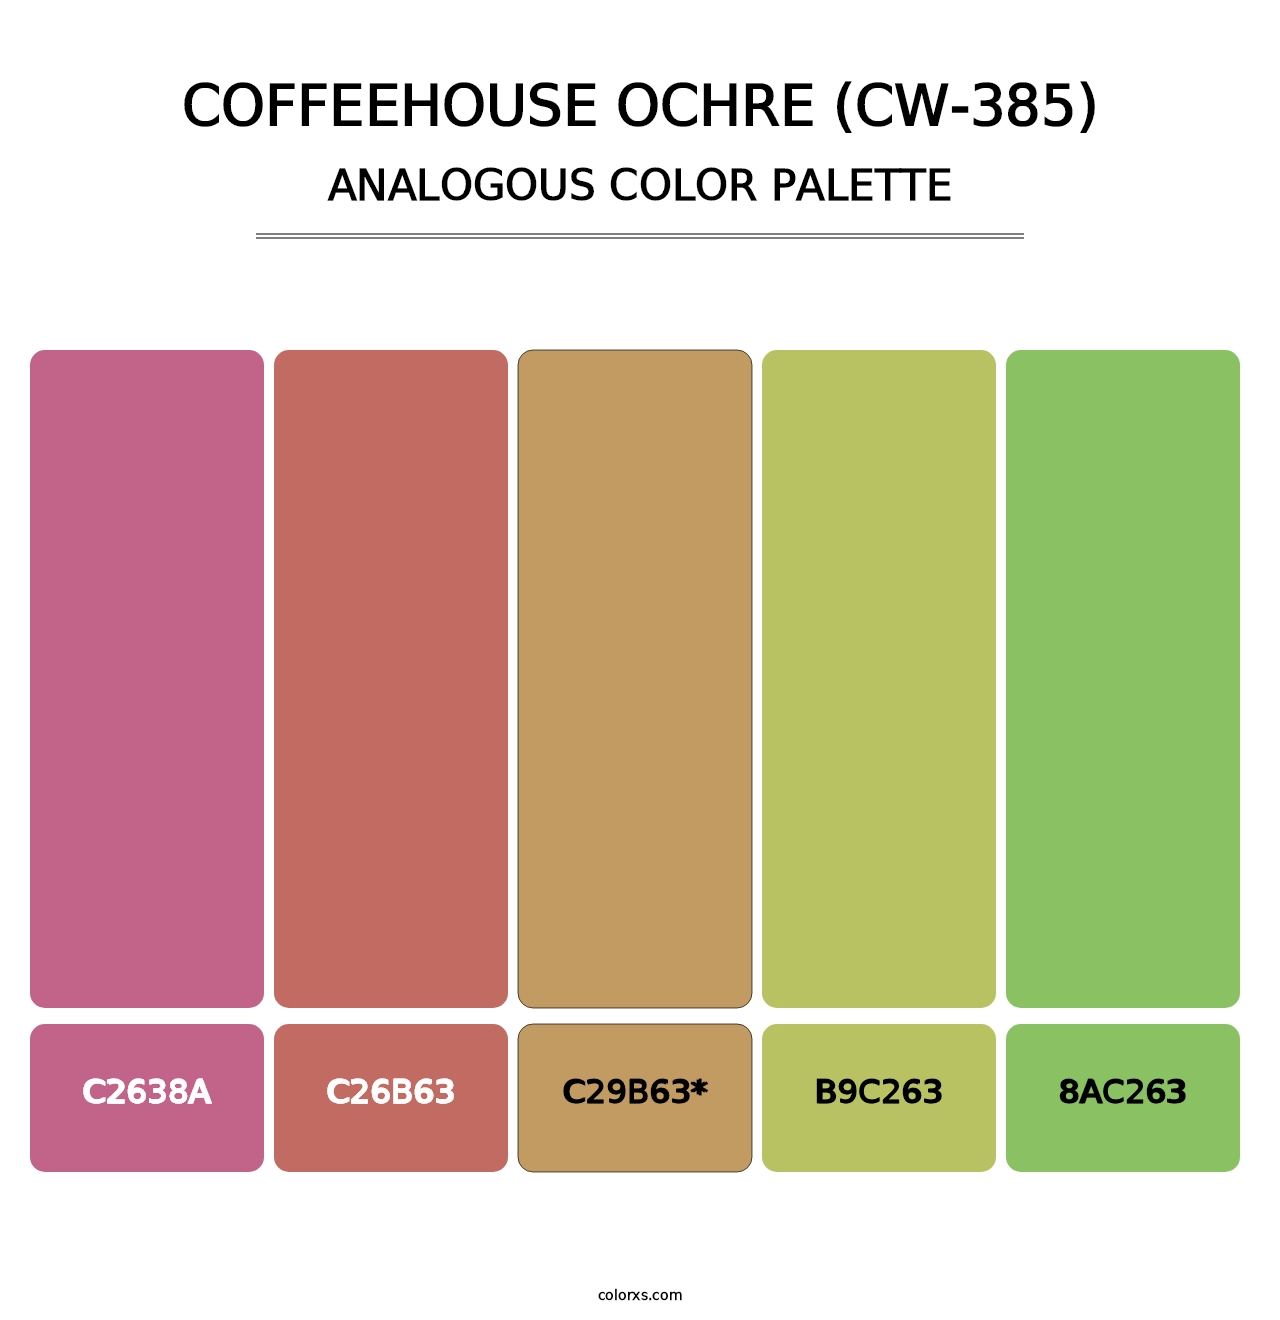 Coffeehouse Ochre (CW-385) - Analogous Color Palette